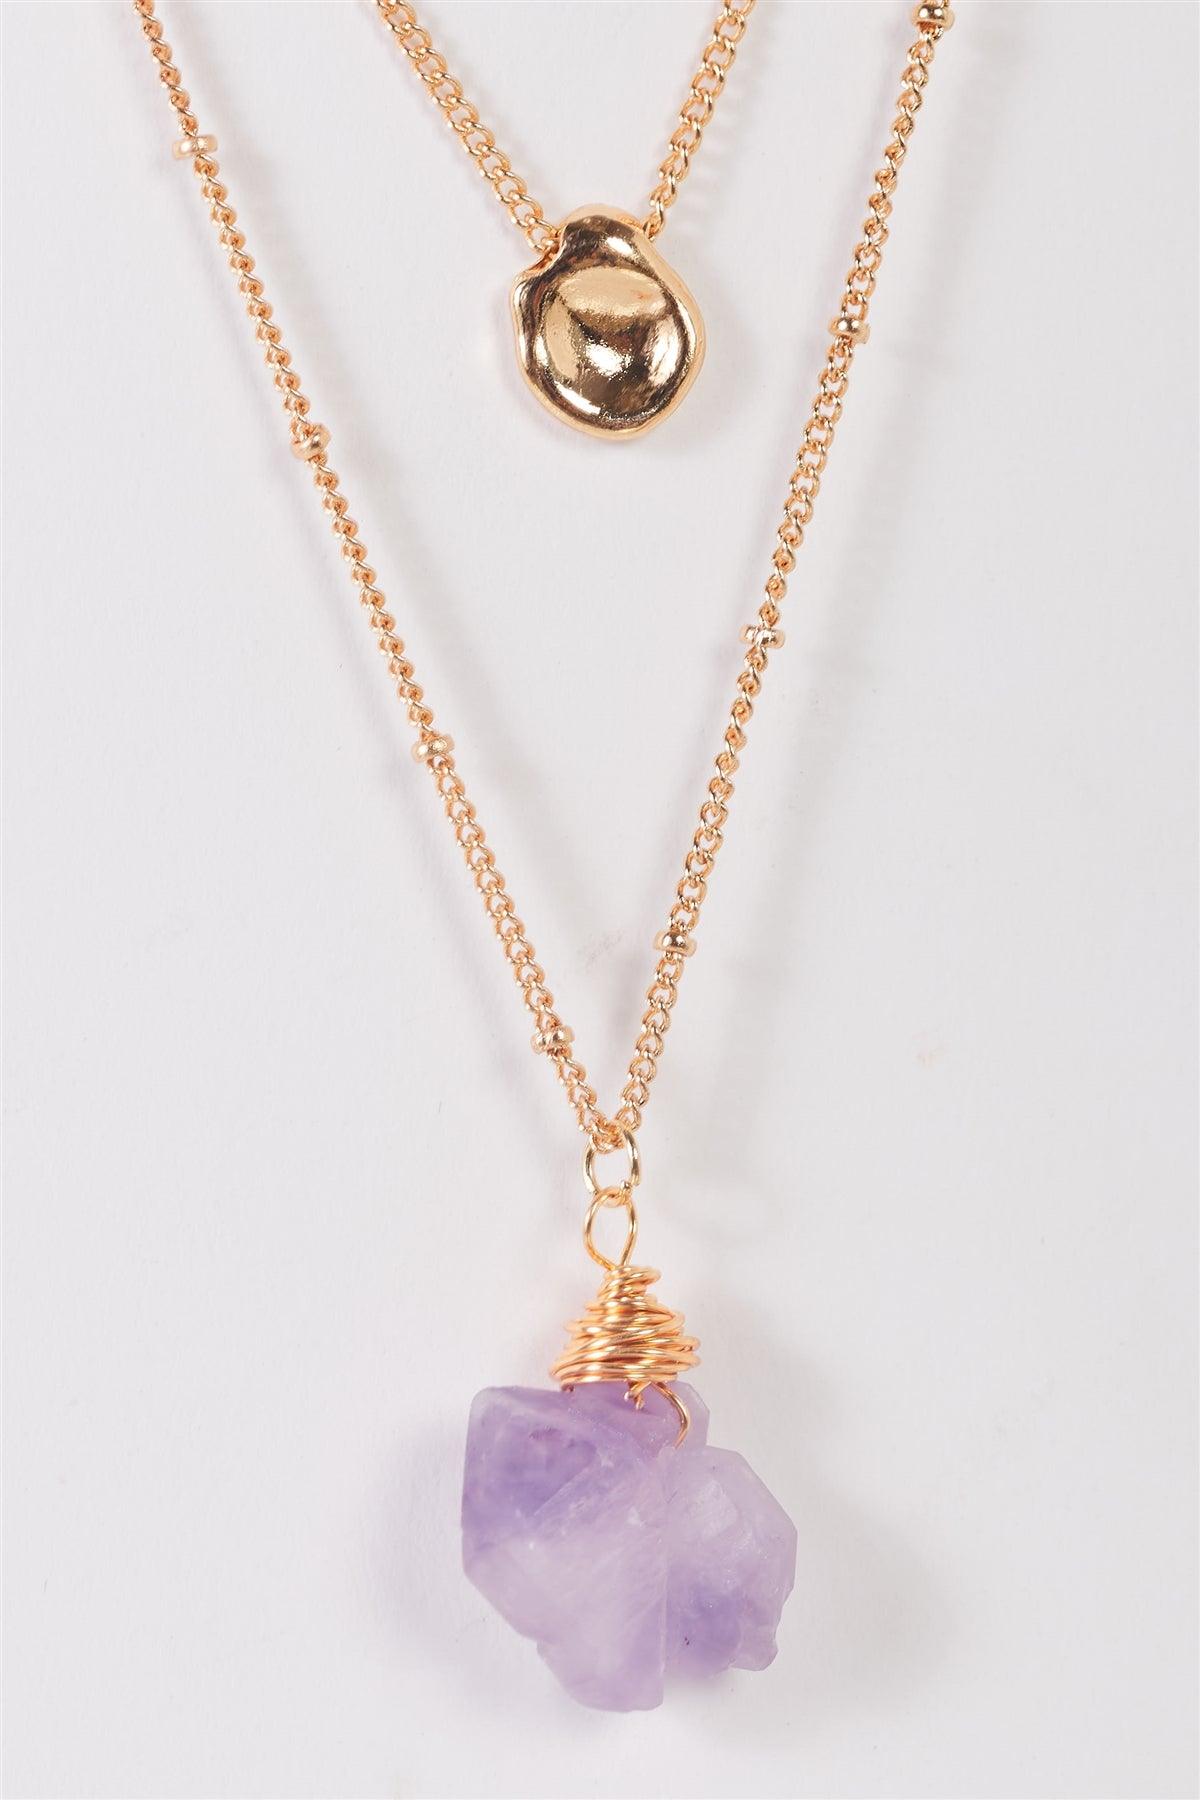 Gold Double Chain With Faux Violet Amethyst Stone & Uneven Circle Pendant Necklace /3 Pieces